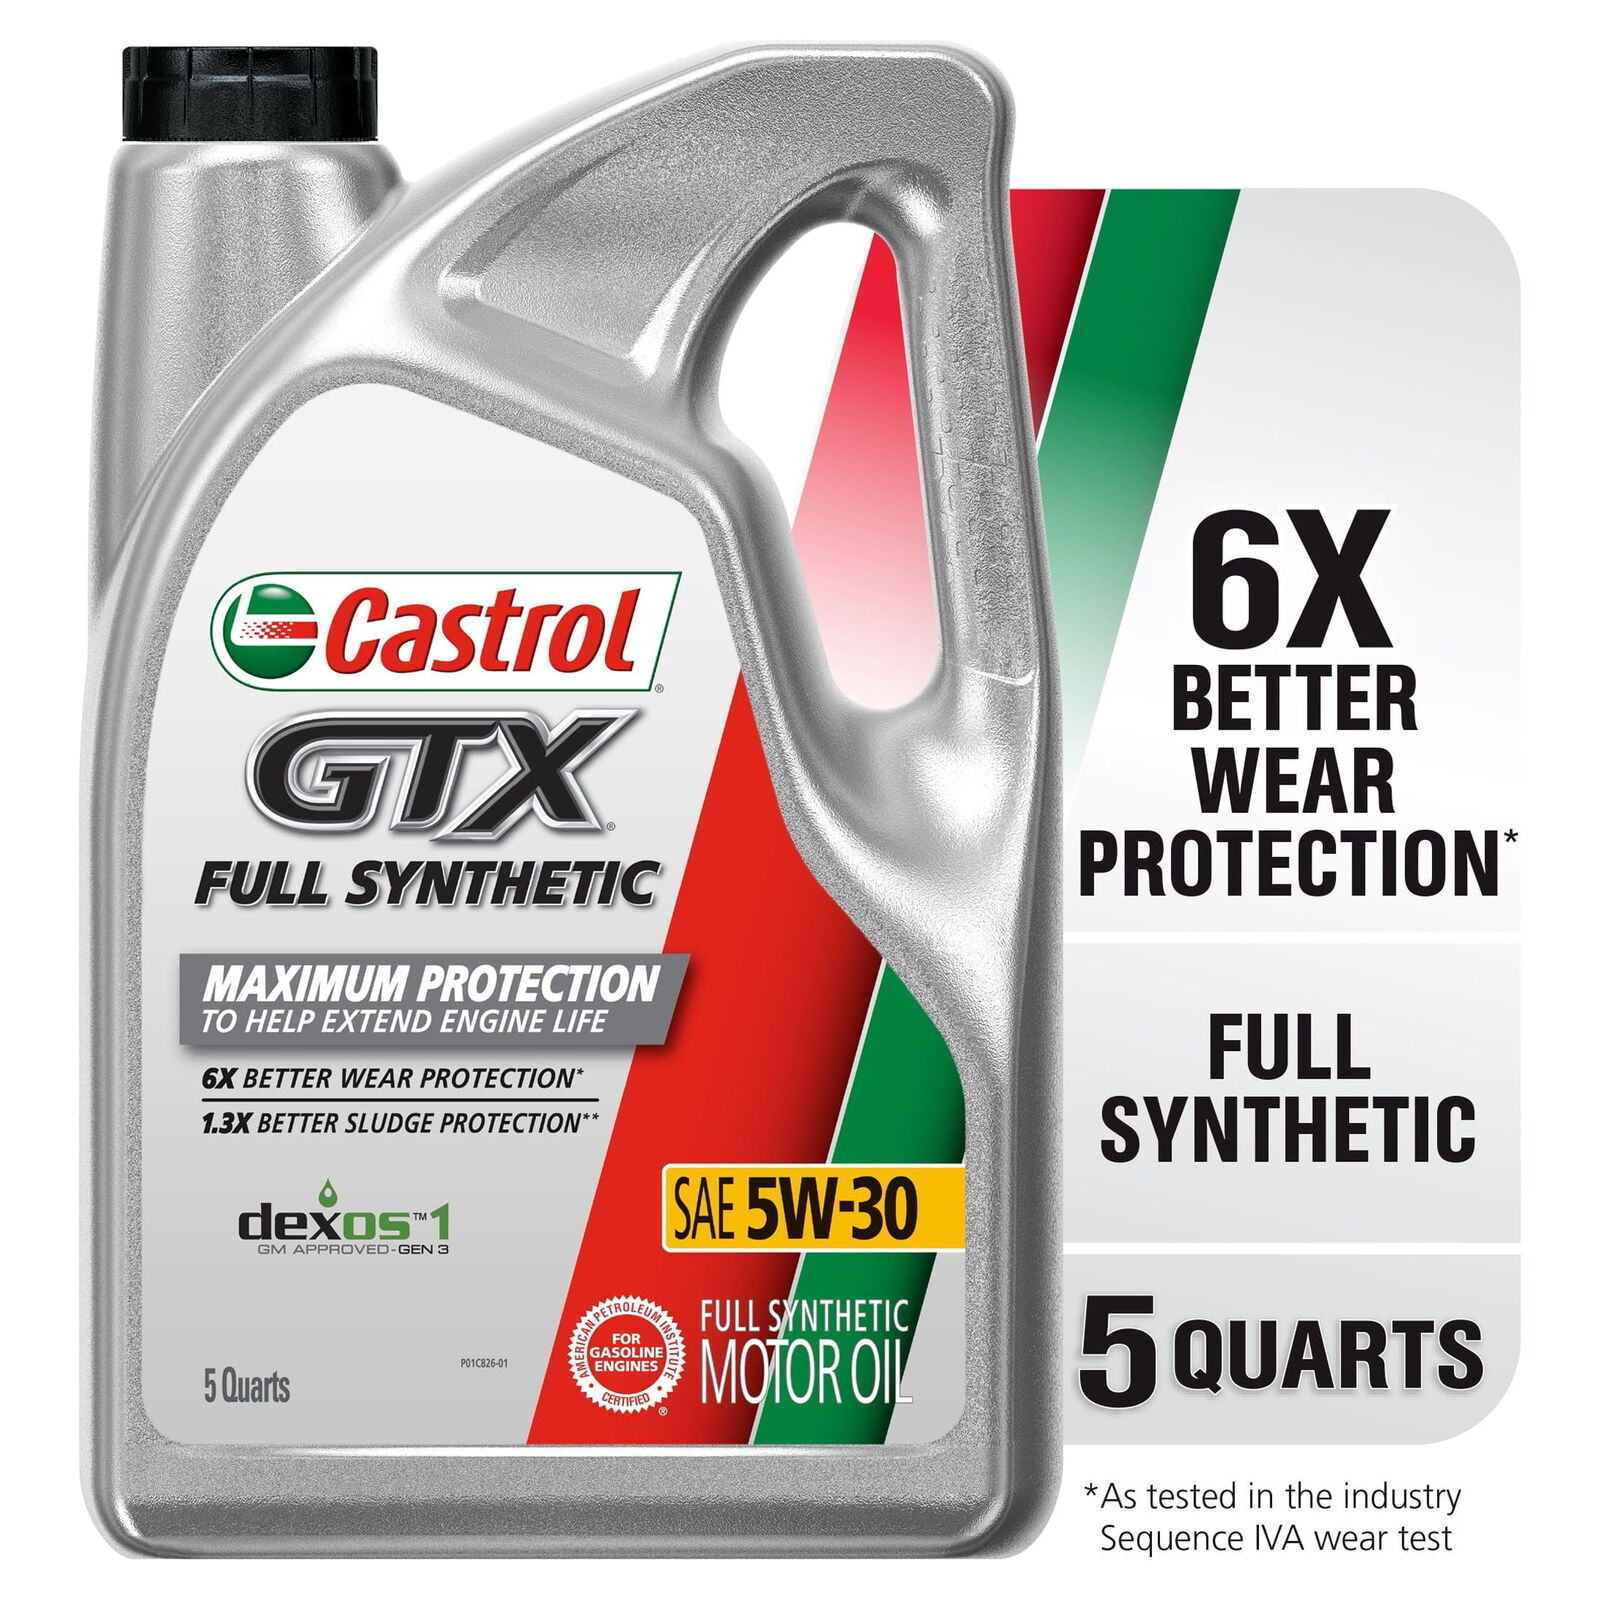 GTX Full Synthetic 5W-30 Motor Oil, 5 Quarts